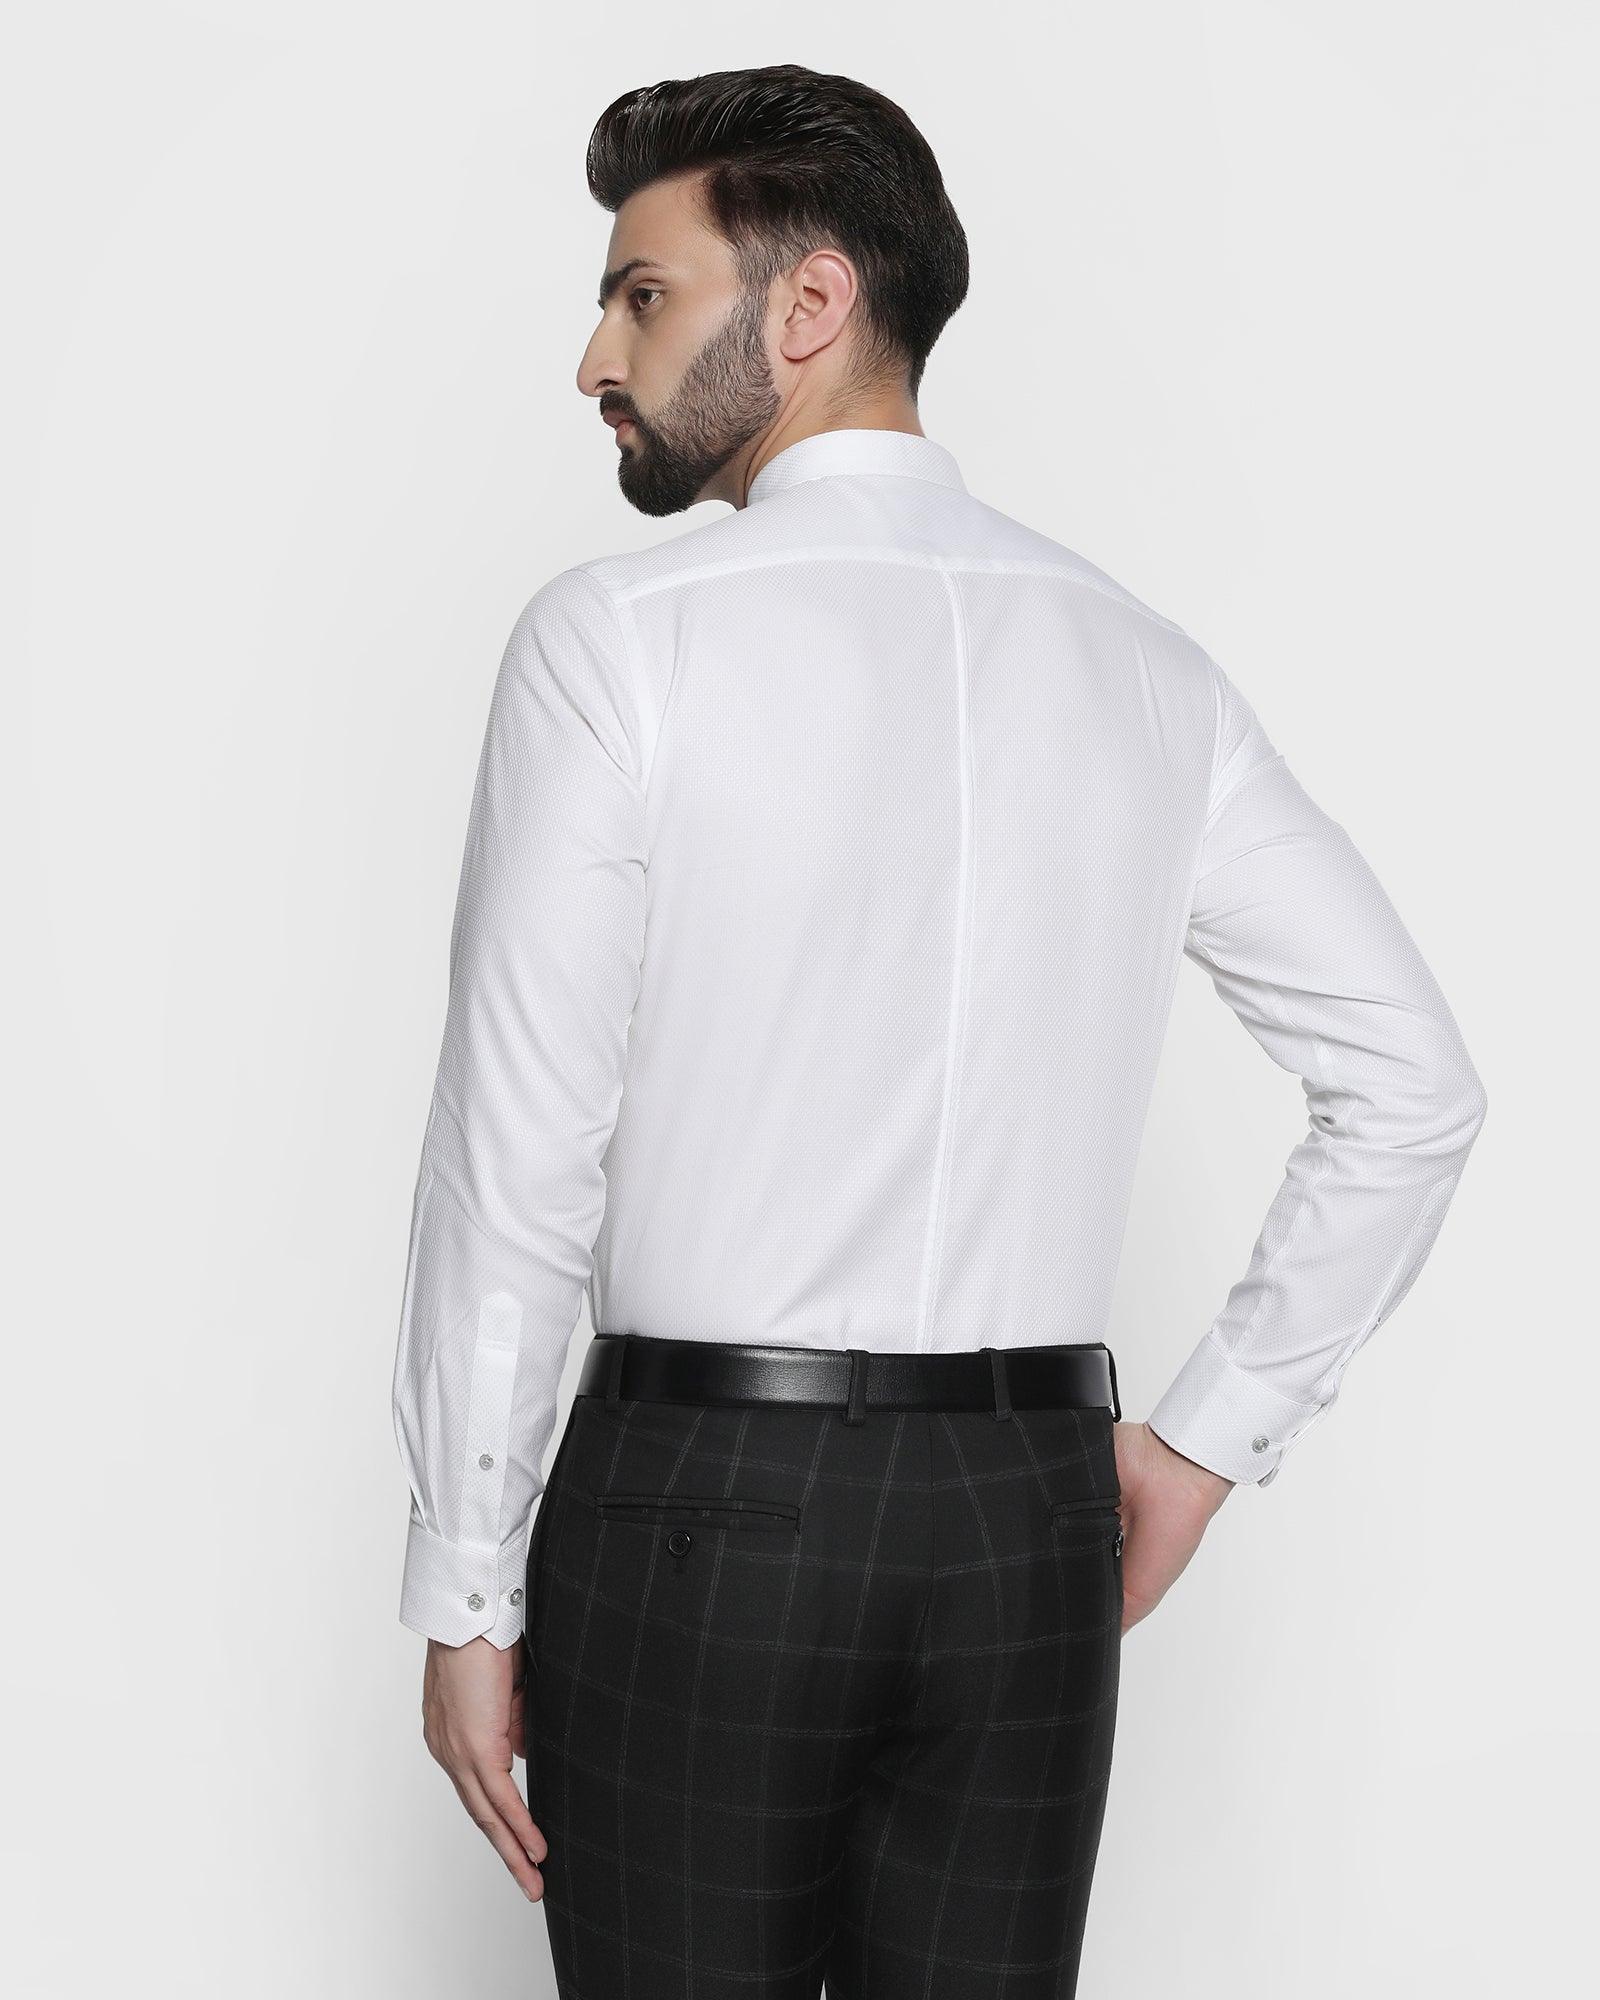 Formal White Textured Shirt - Chris